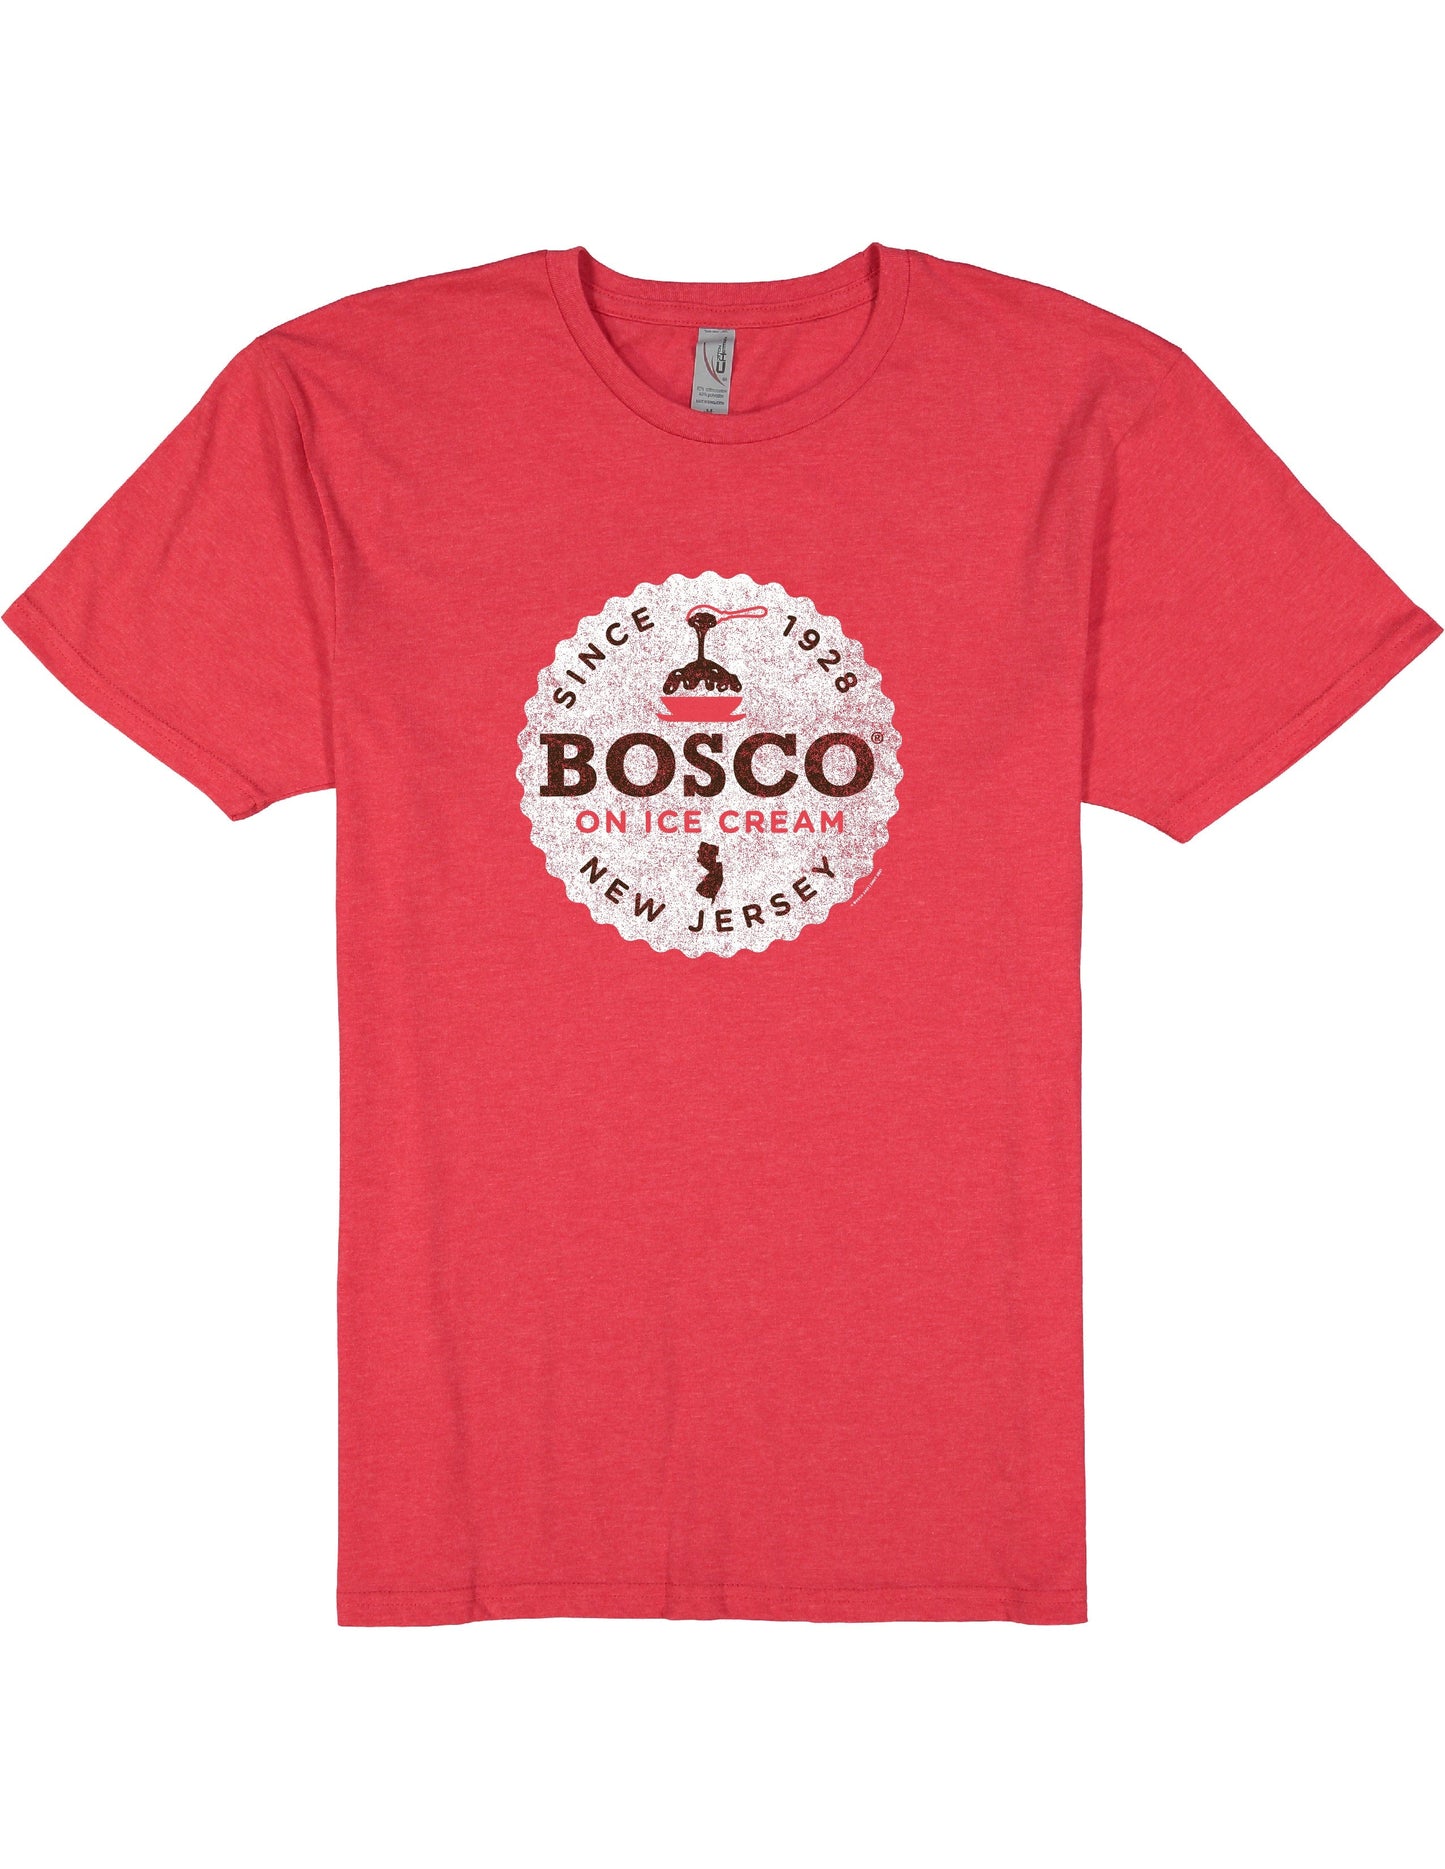 BOSCO® On Ice Cream Unisex Tee | Vintage Bottle Cap Label | Est. in New Jersey Shirt